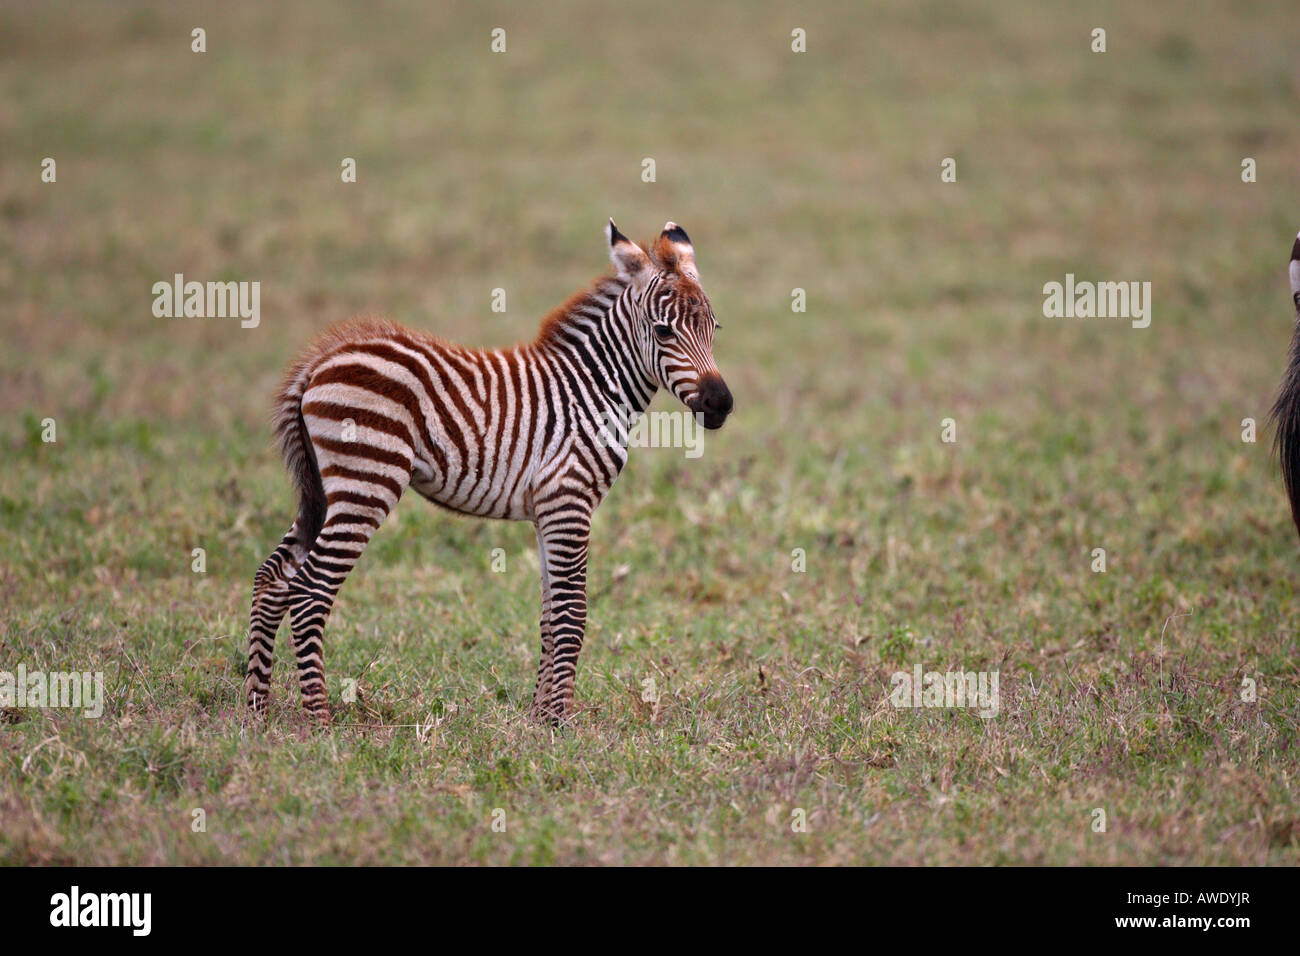 Premium Photo  Zebra foal baby with its long legs